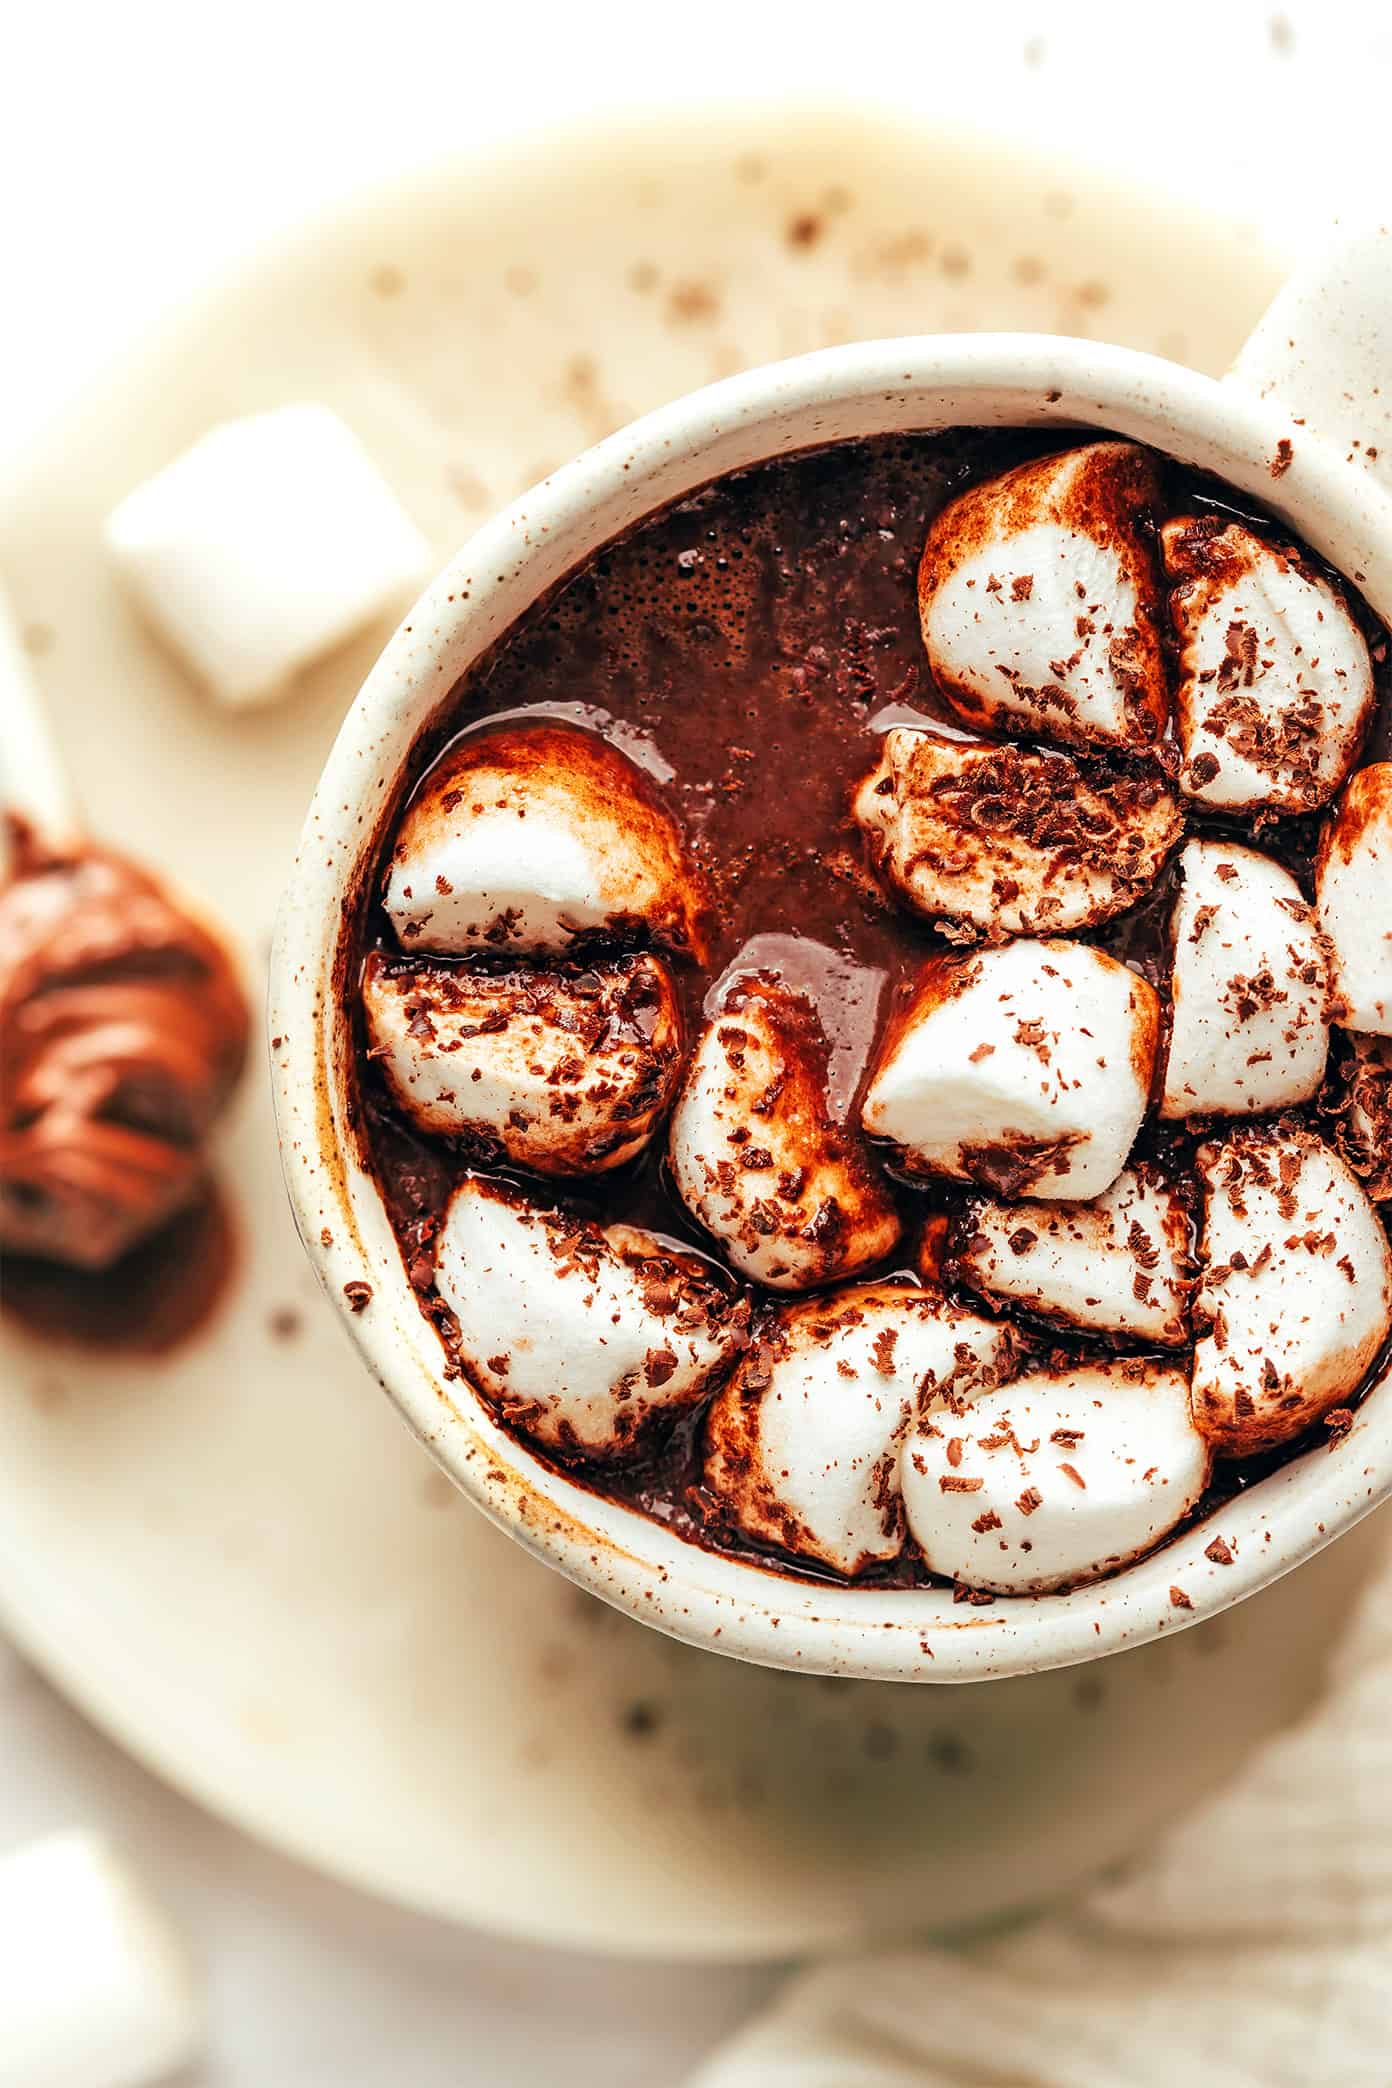 How to Make a DIY Hot Chocolate Bar - In Fine Taste